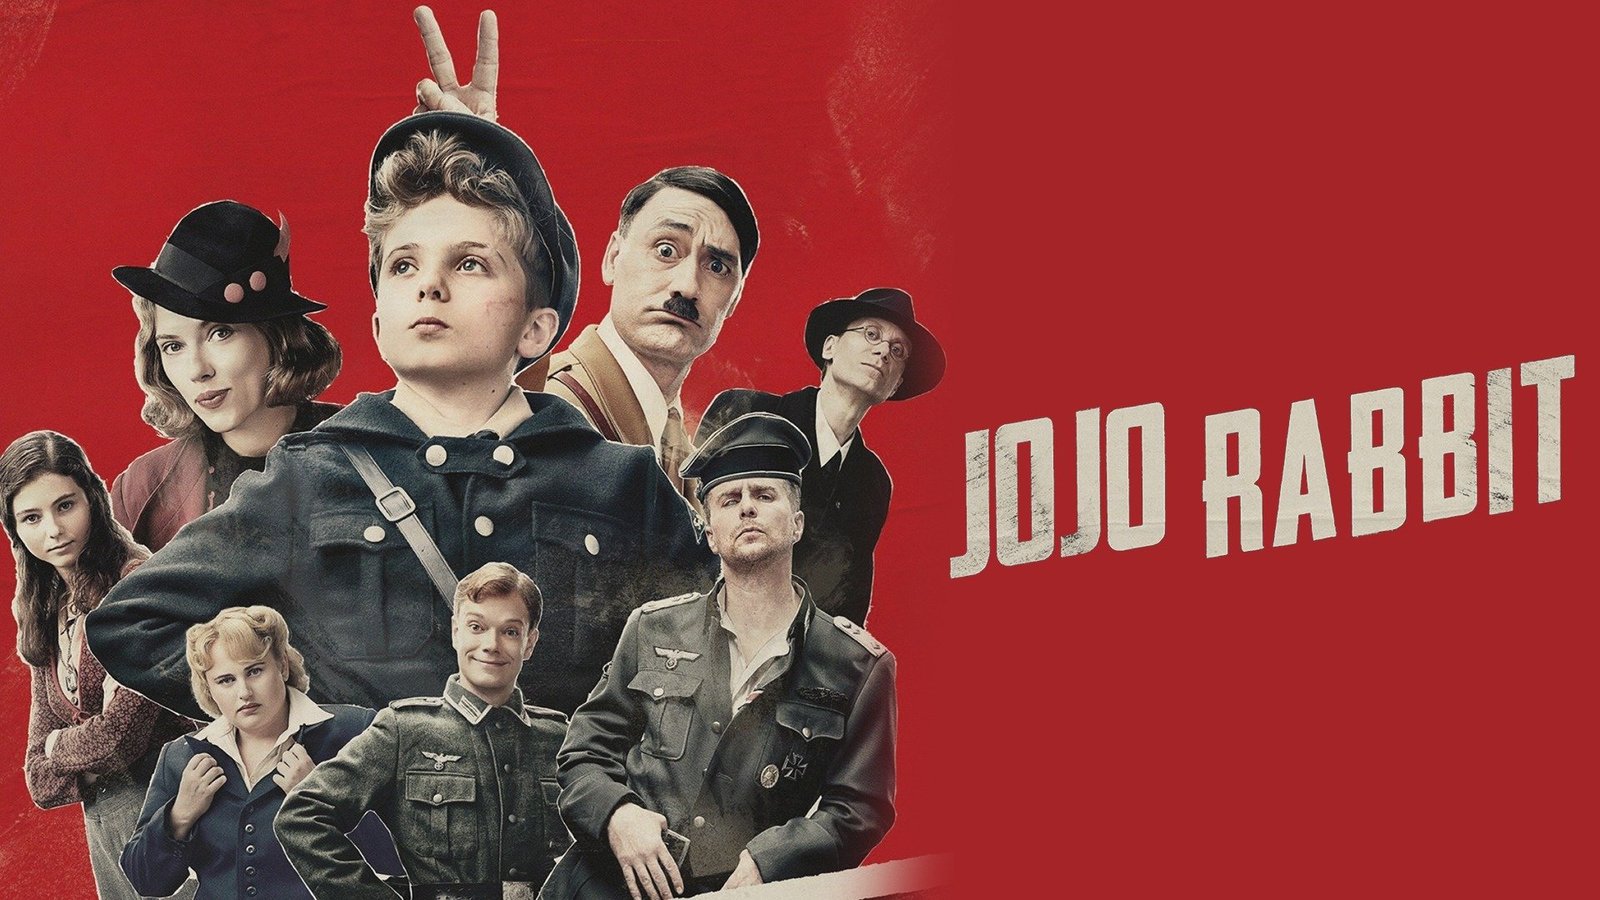 Jojo Rabbit (2019) Movie Poster